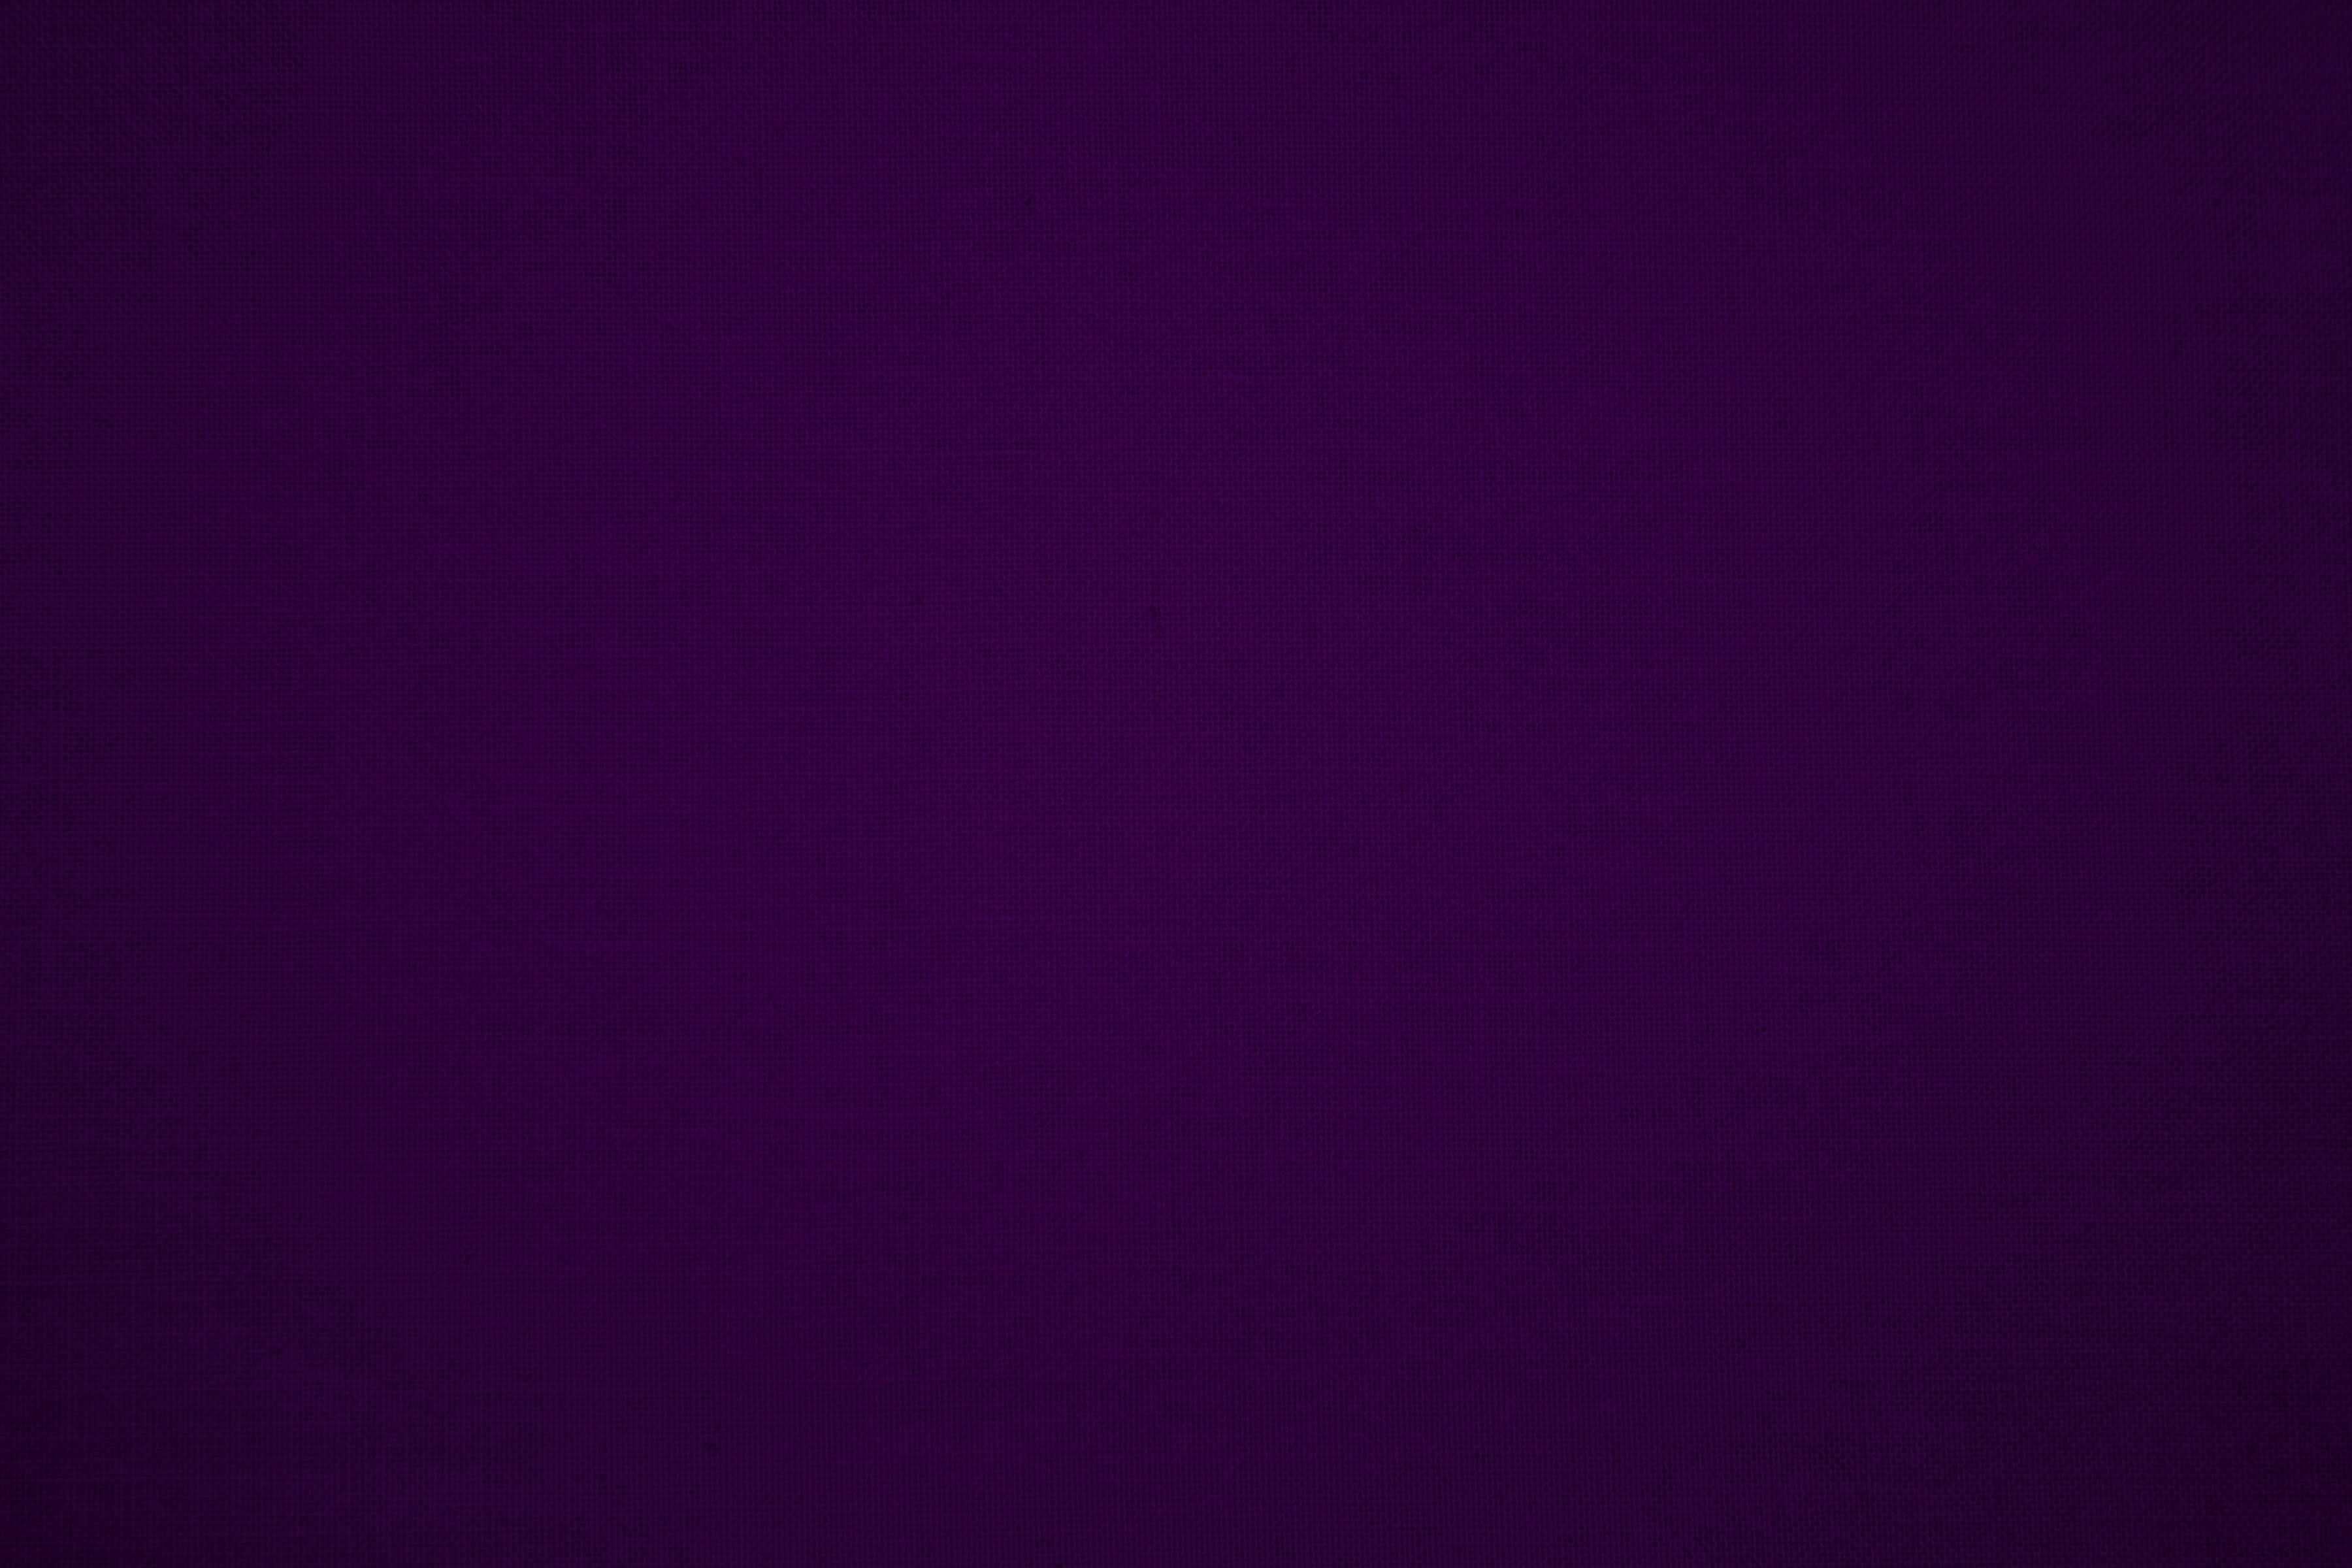 Free Dark Purple Aesthetic Wallpaper - Download in JPG